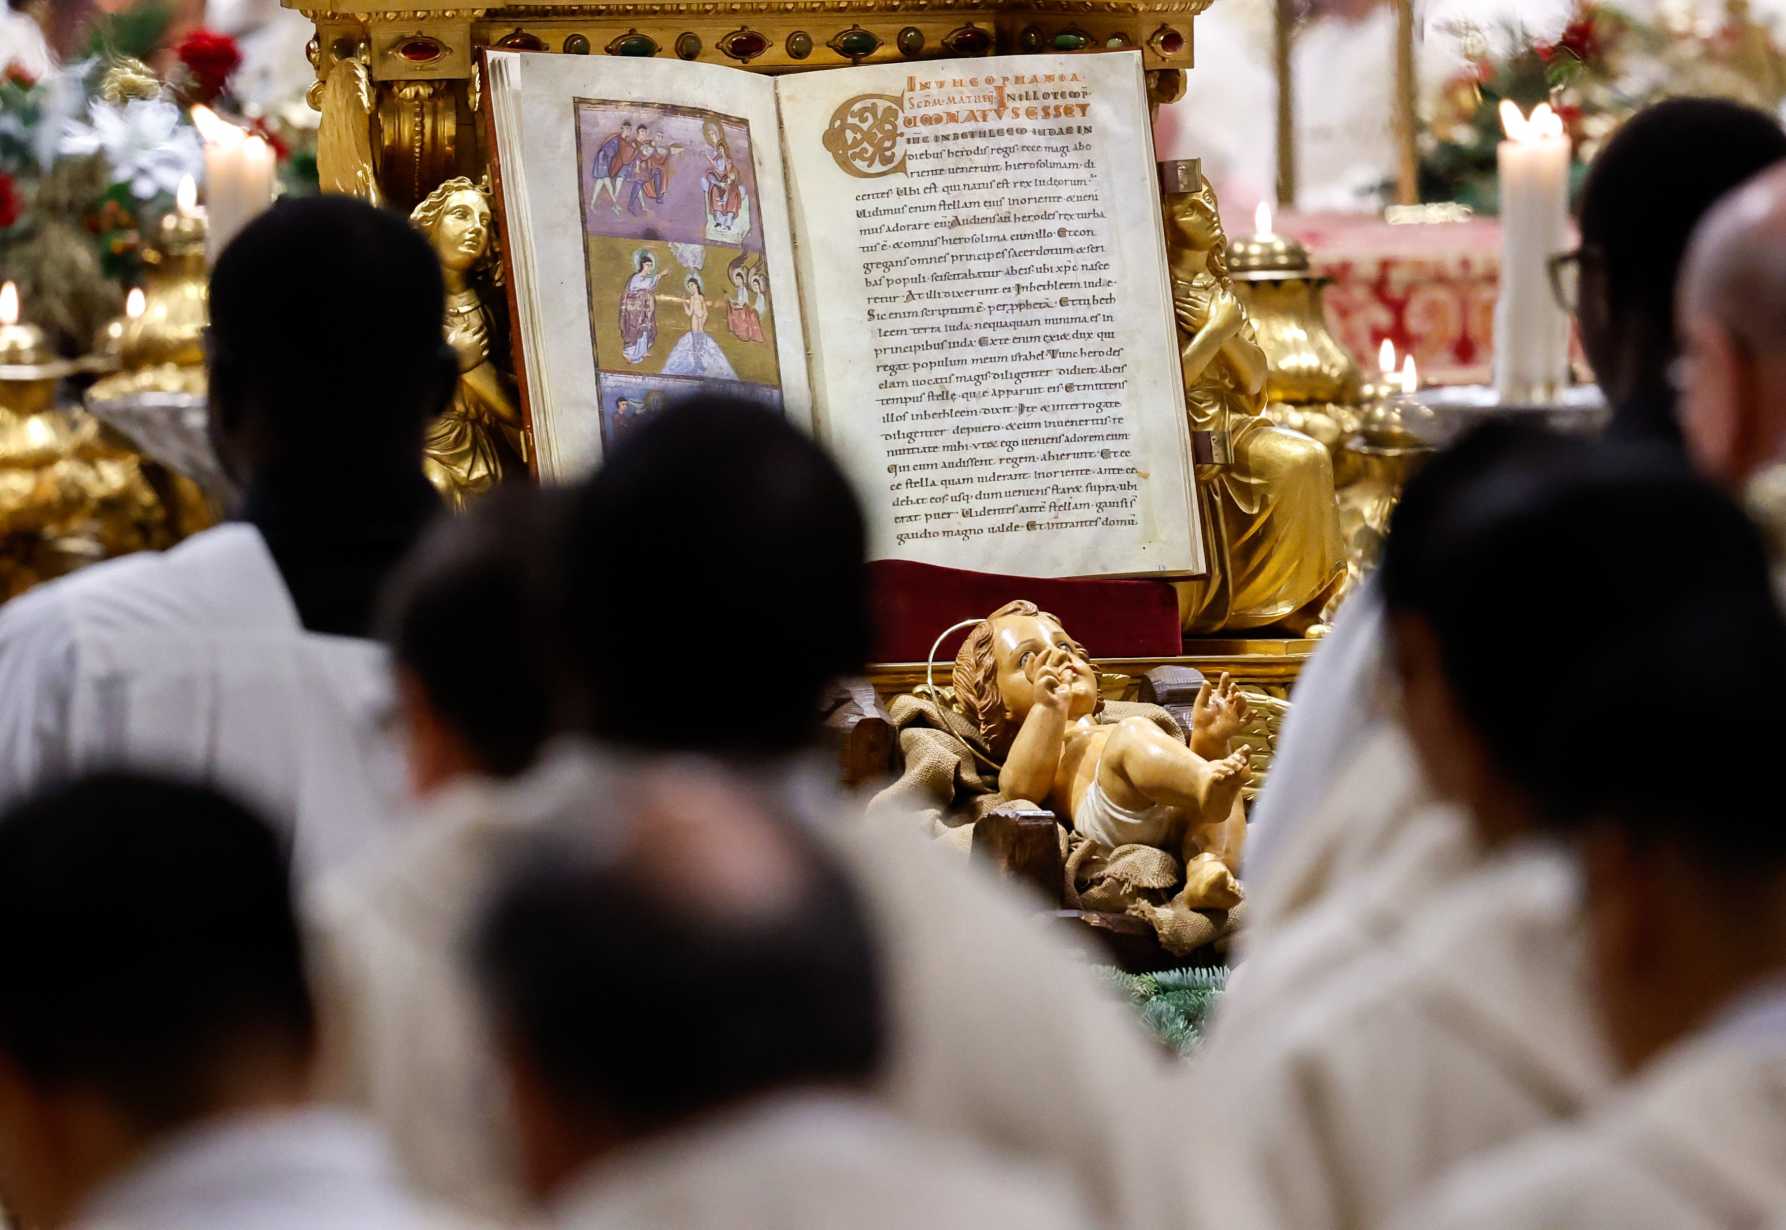 Faithful must put Jesus, not ideology, in spotlight, pope says on Epiphany